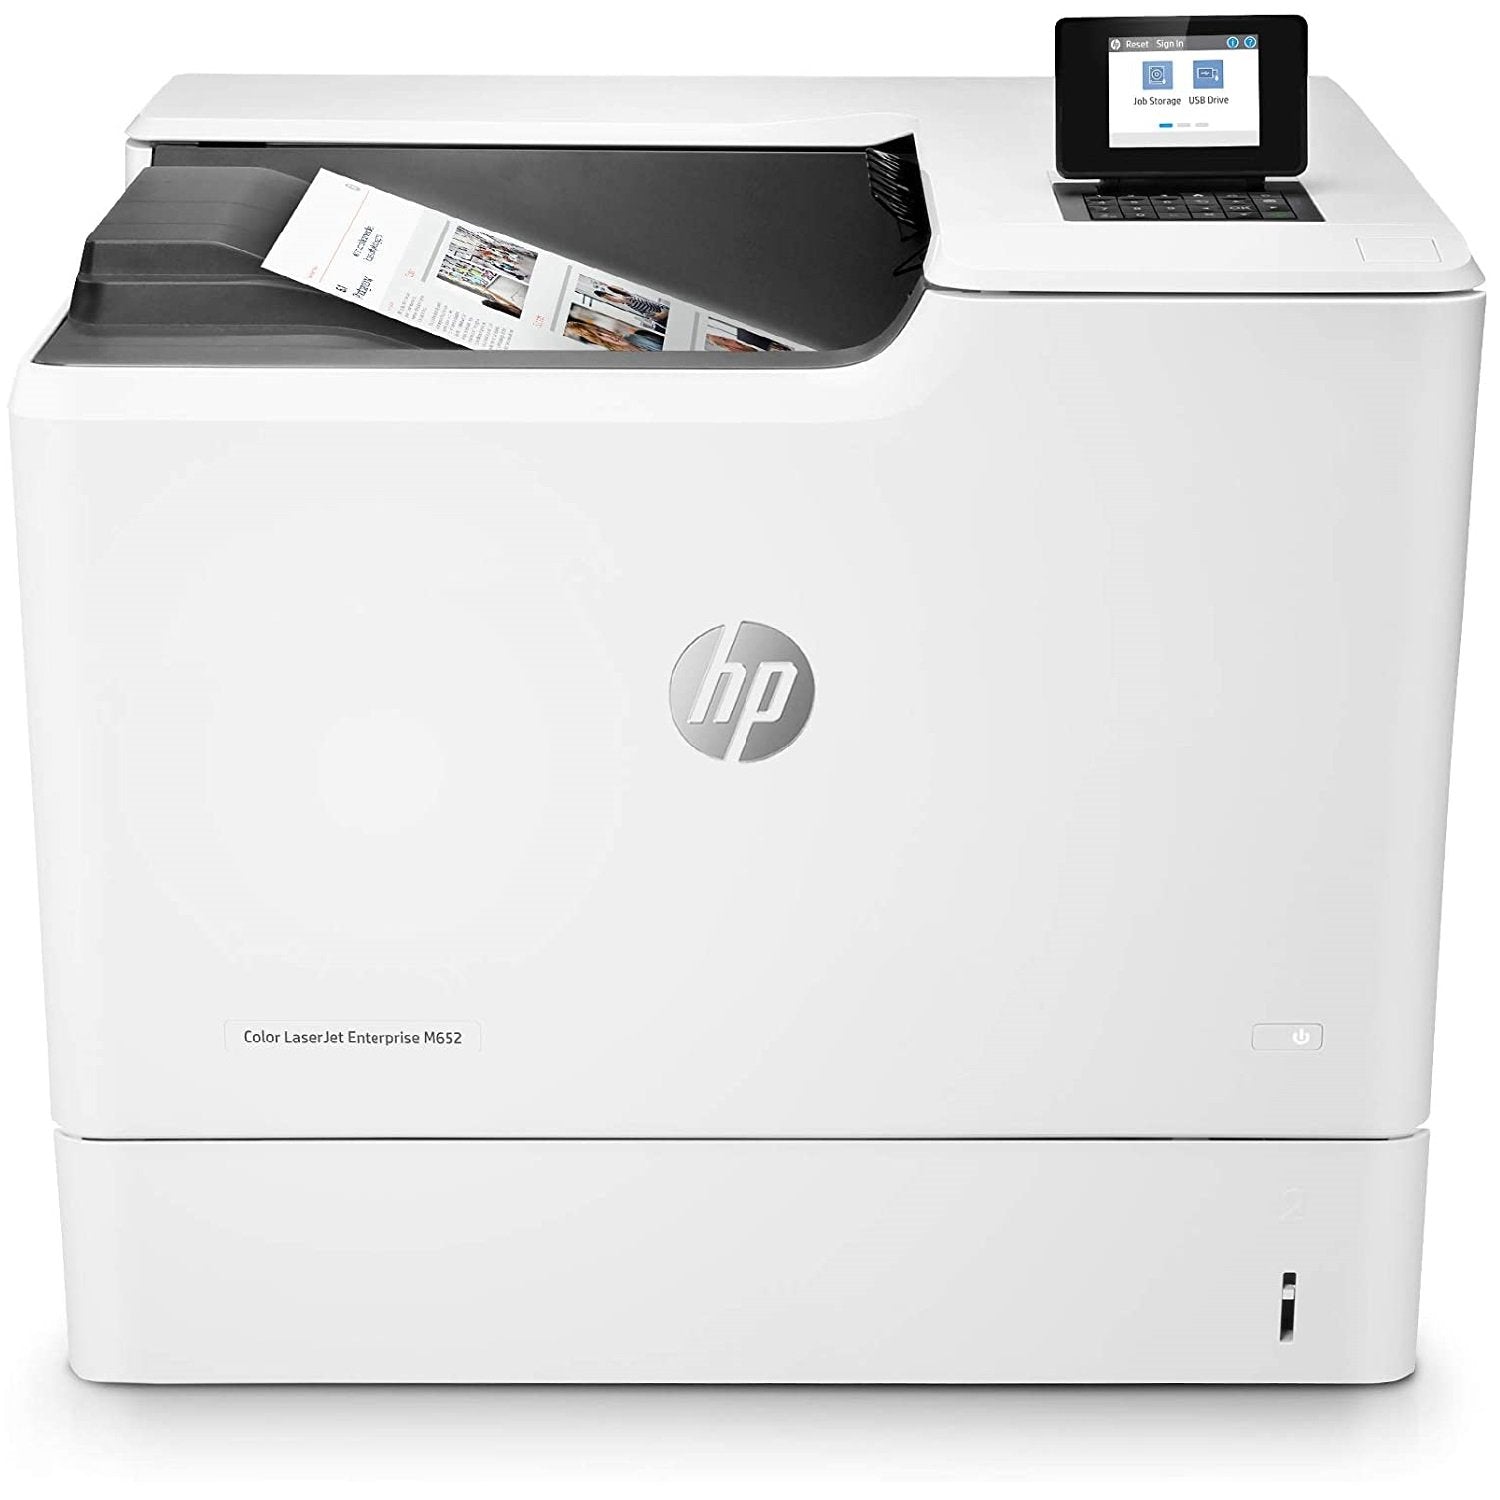 Absolute Toner HP Color LaserJet Managed E65060 Commercial Very Economical High-Speed Color Laser printer For Office Use Laser Printer